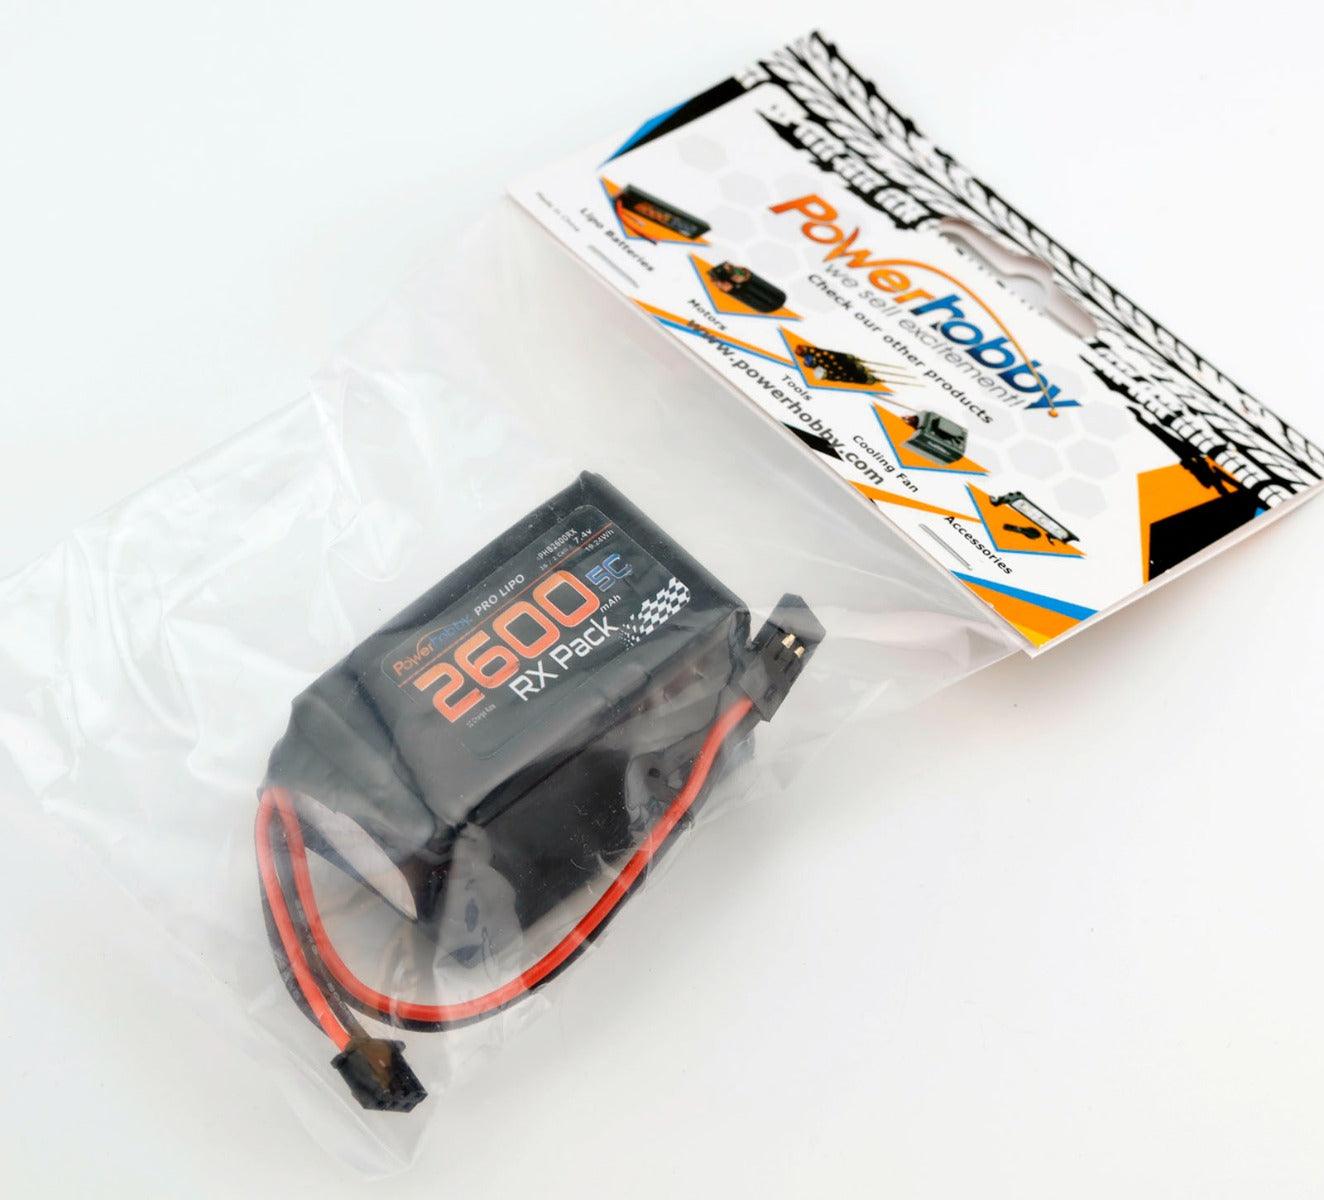 Powerhobby 2S 7.4V 2600mAh 5C RX Receiver Lipo Hump Battery Pack Servo Connector - PowerHobby